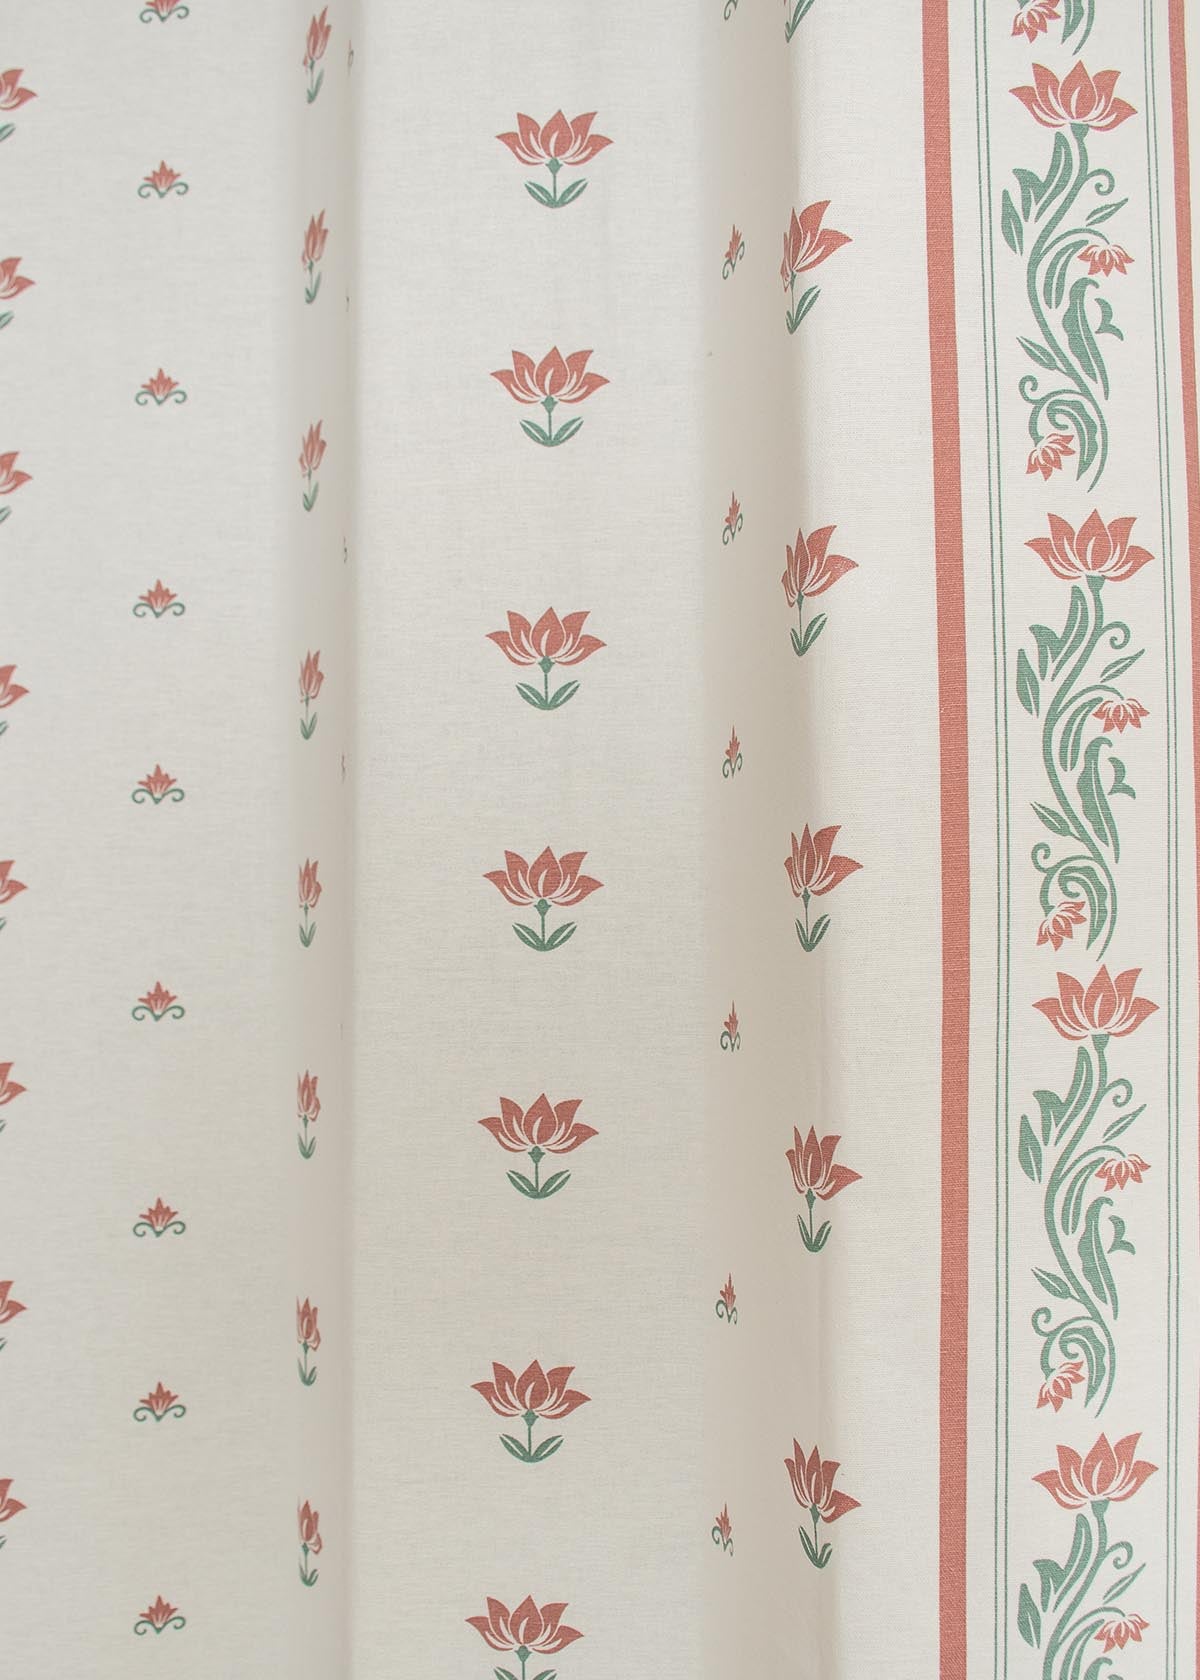 Lotus Pond 100% Customizable Cotton minimal curtain for living room - Room darkening - Multicolor